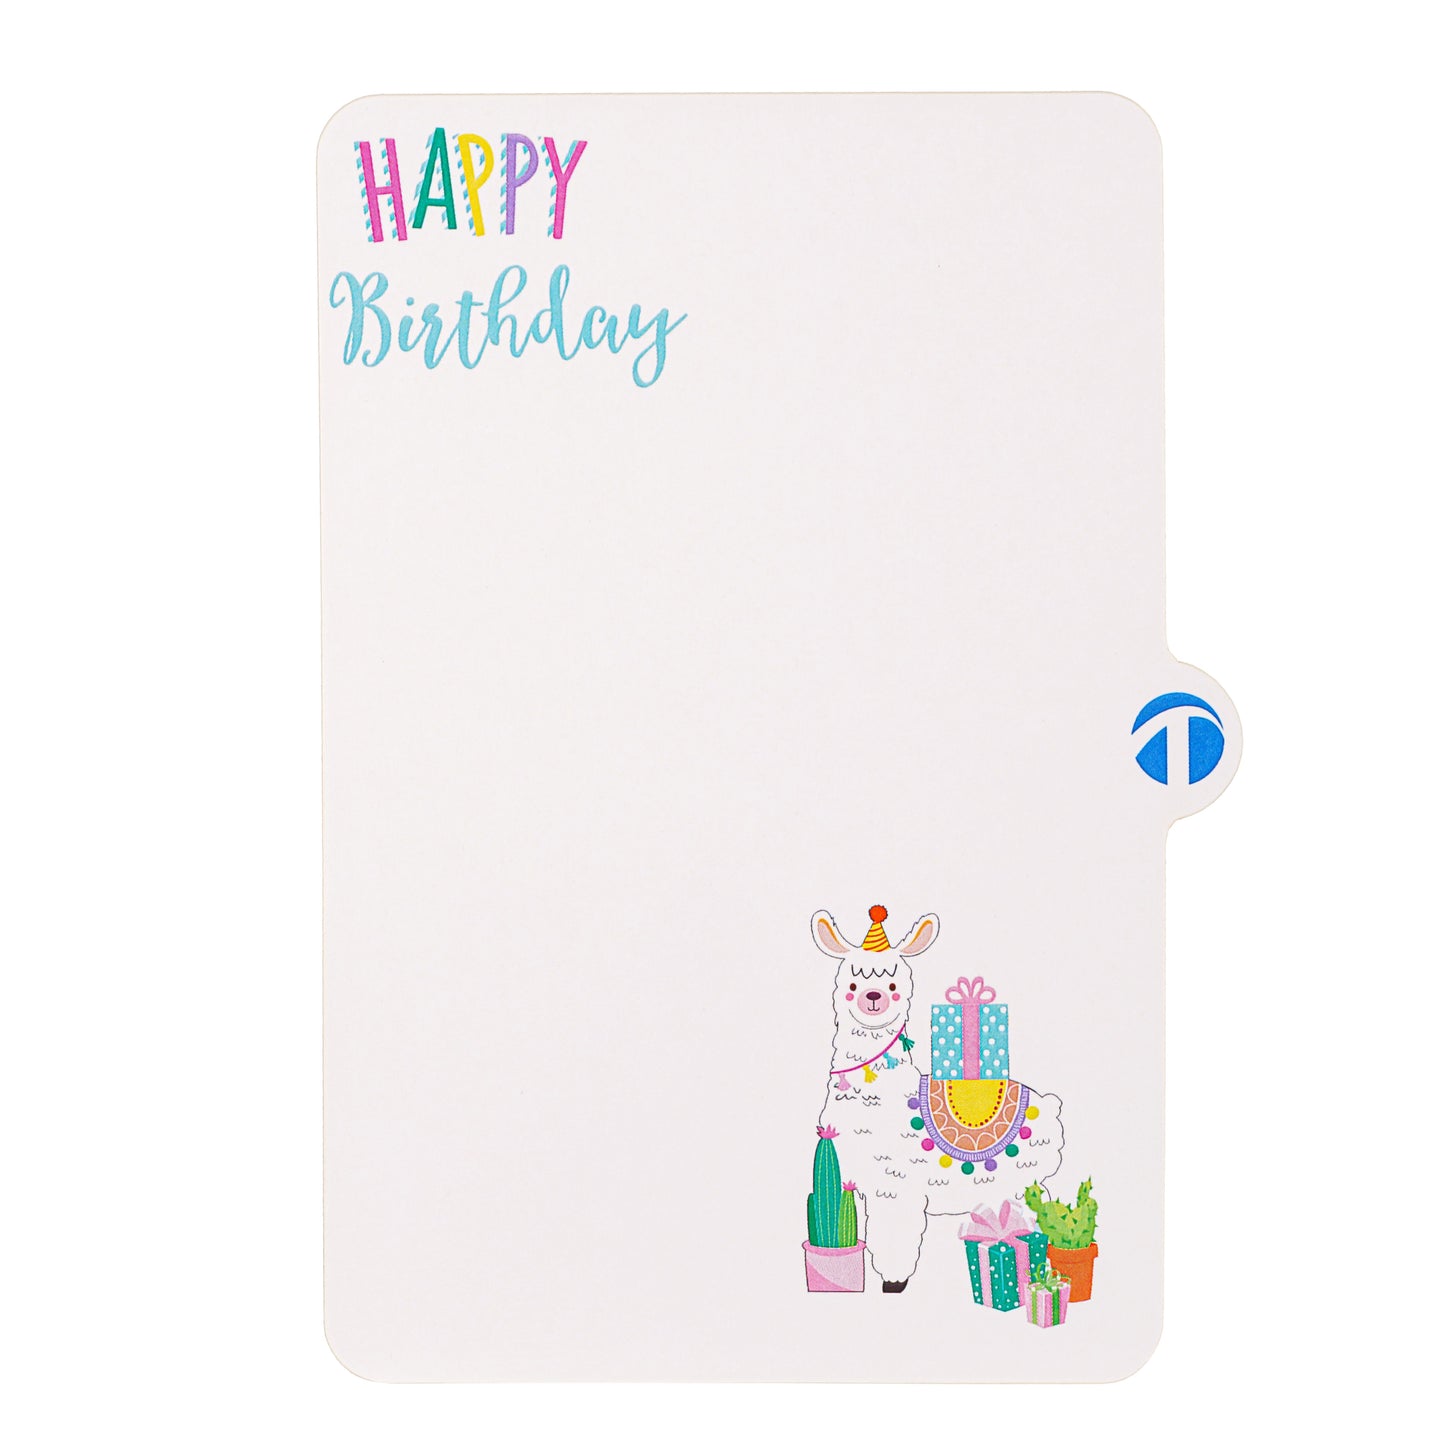 Llama Hold Gift Box Birthday Card